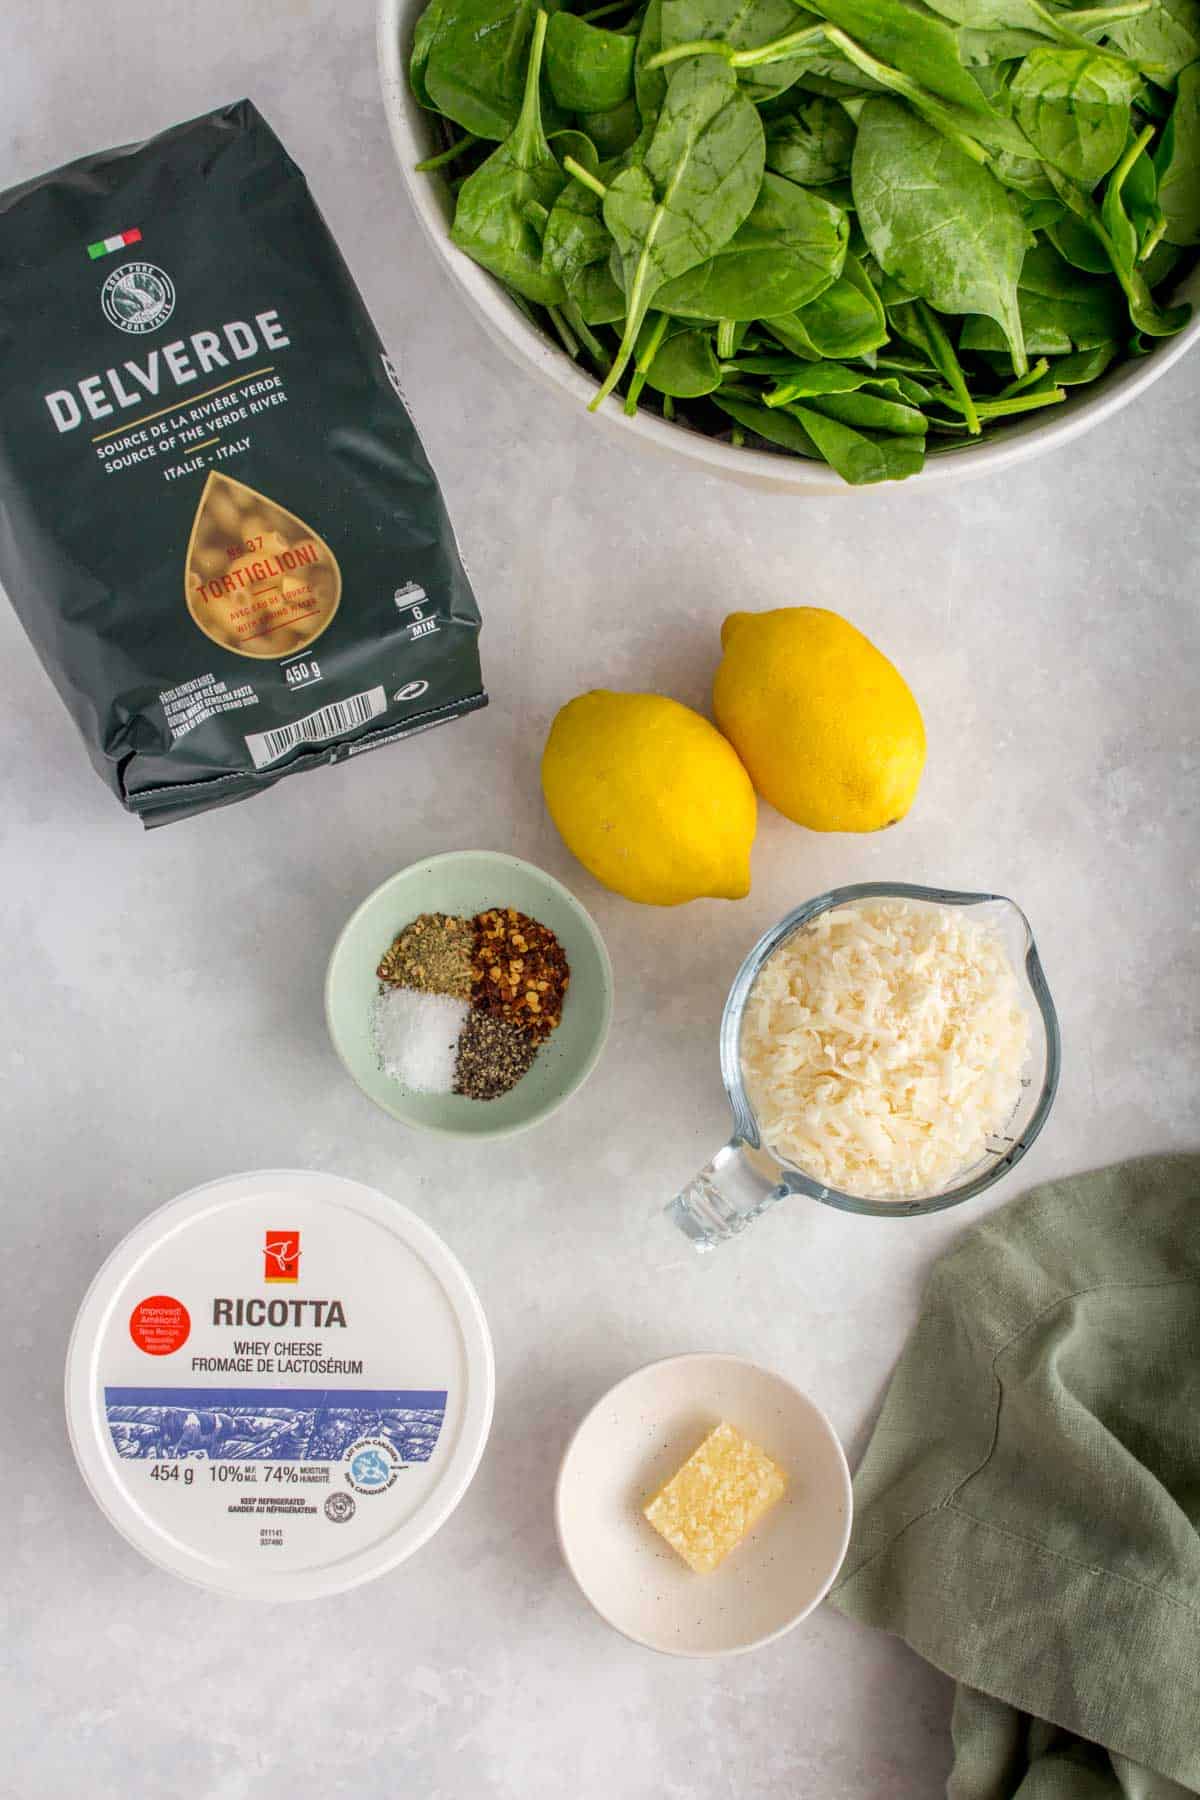 Ingredients needed to make this lemon ricotta pasta.